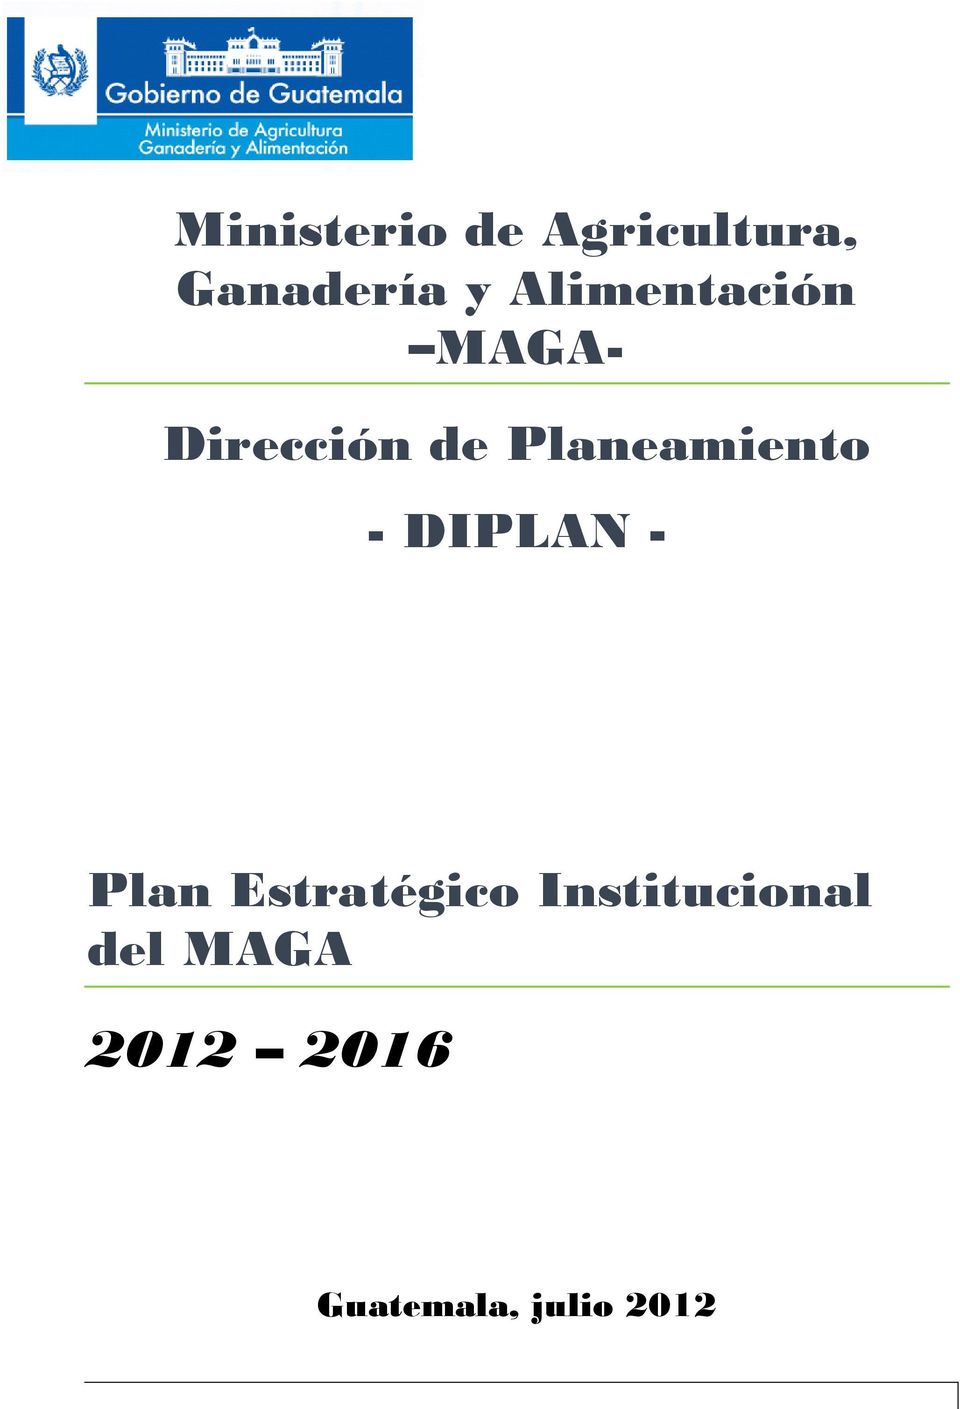 Planeamiento - DIPLAN - Plan